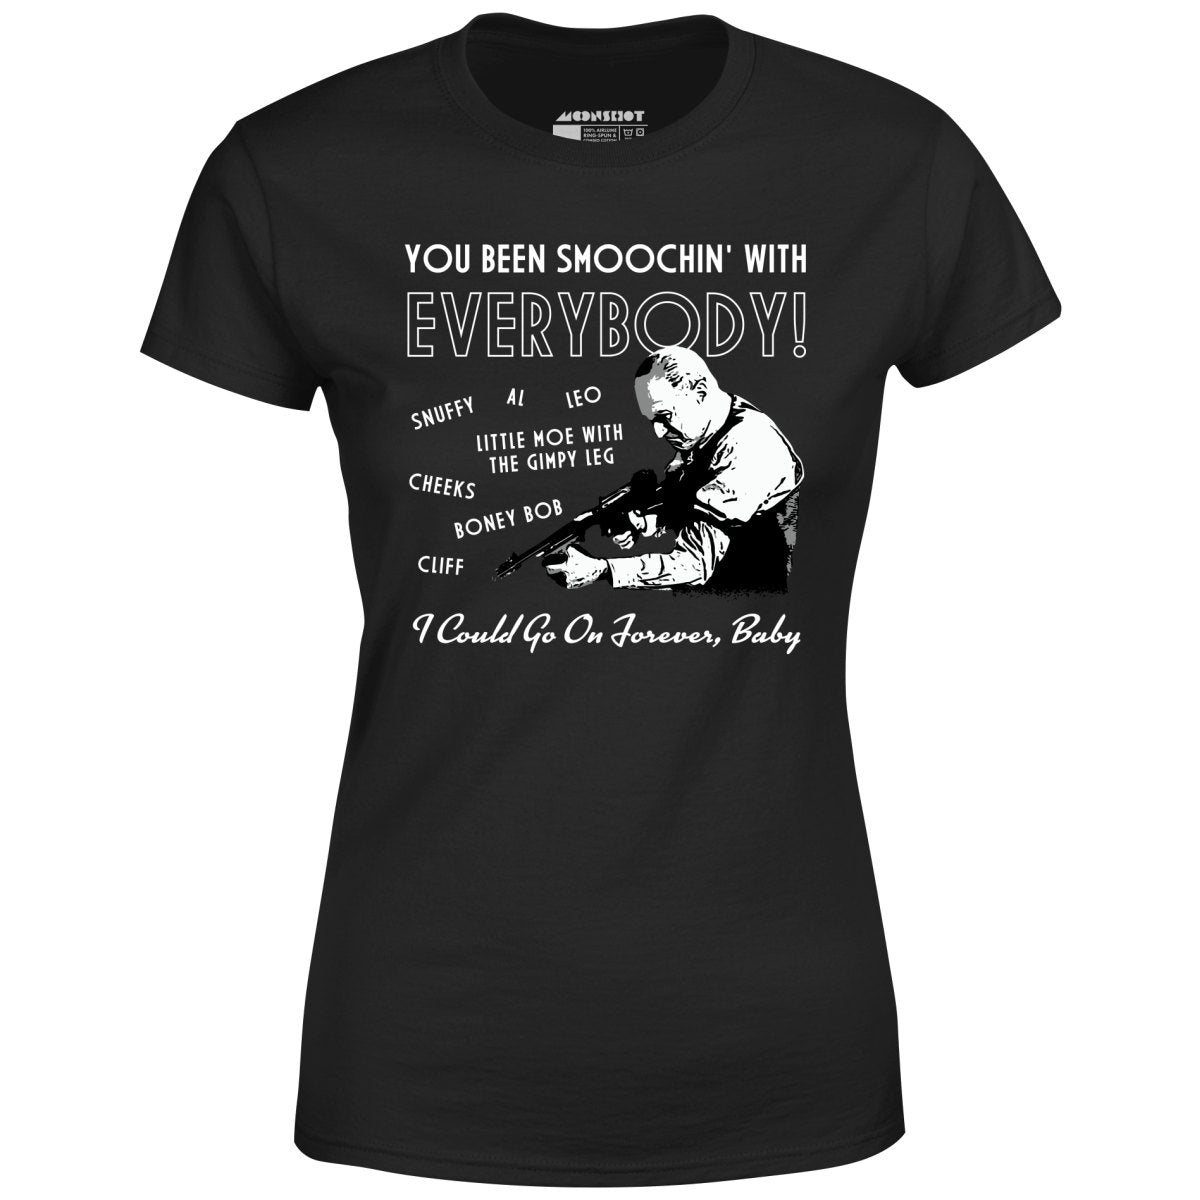 You Been Smoochin' with Everybody - Women's T-Shirt